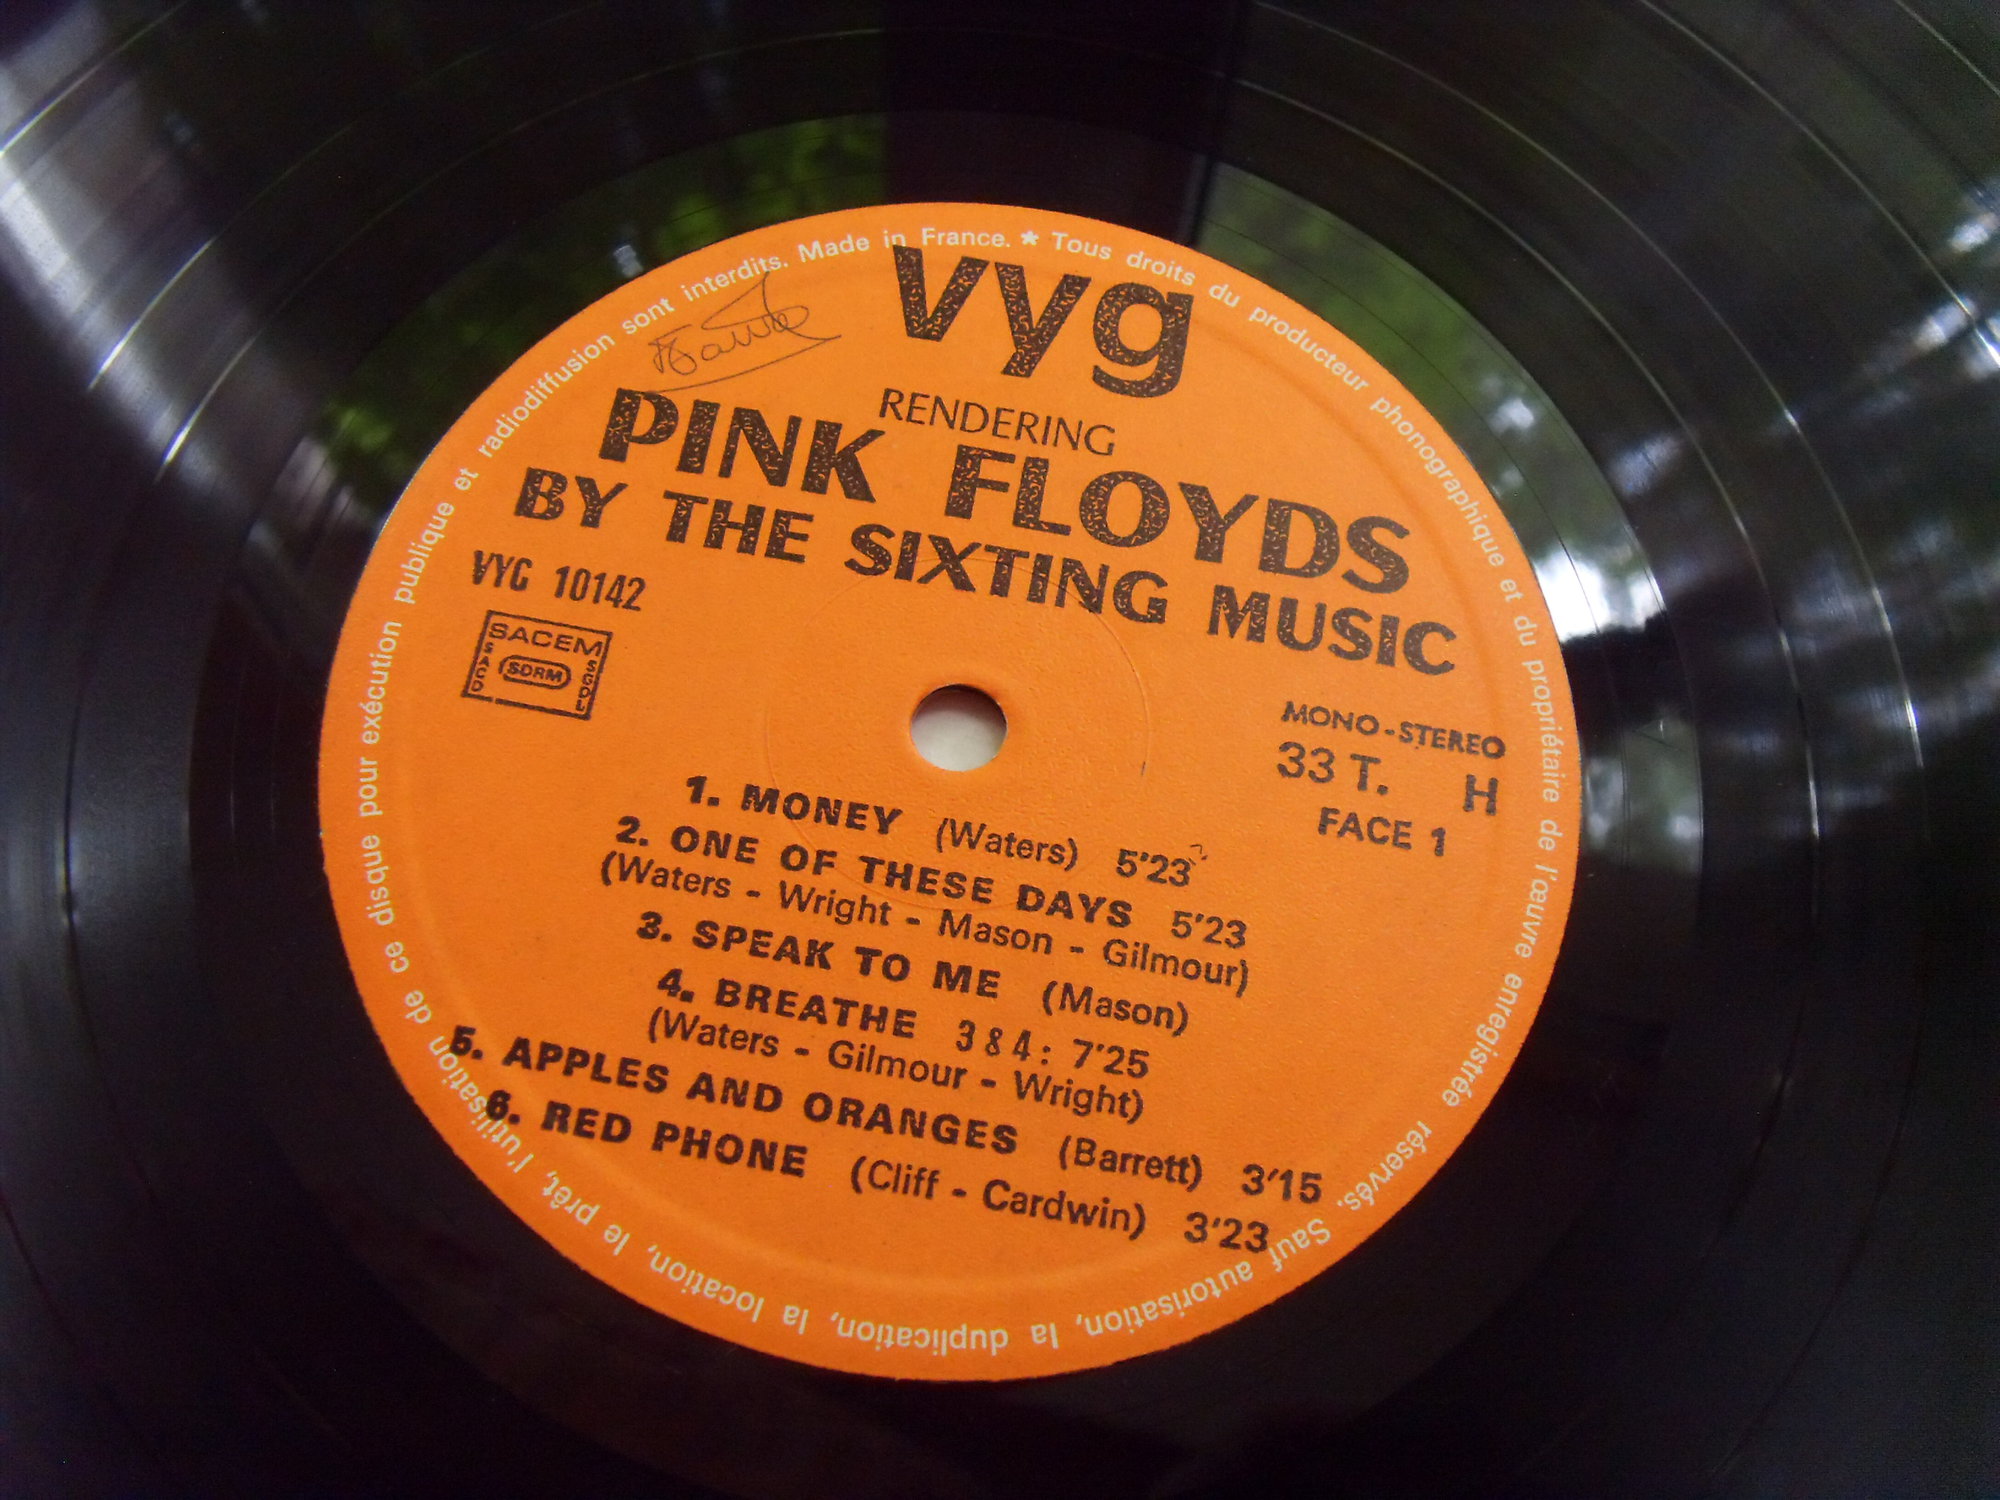 PINK FLOYDS SIXTING MUSIC Rendering Pink Floyds 3